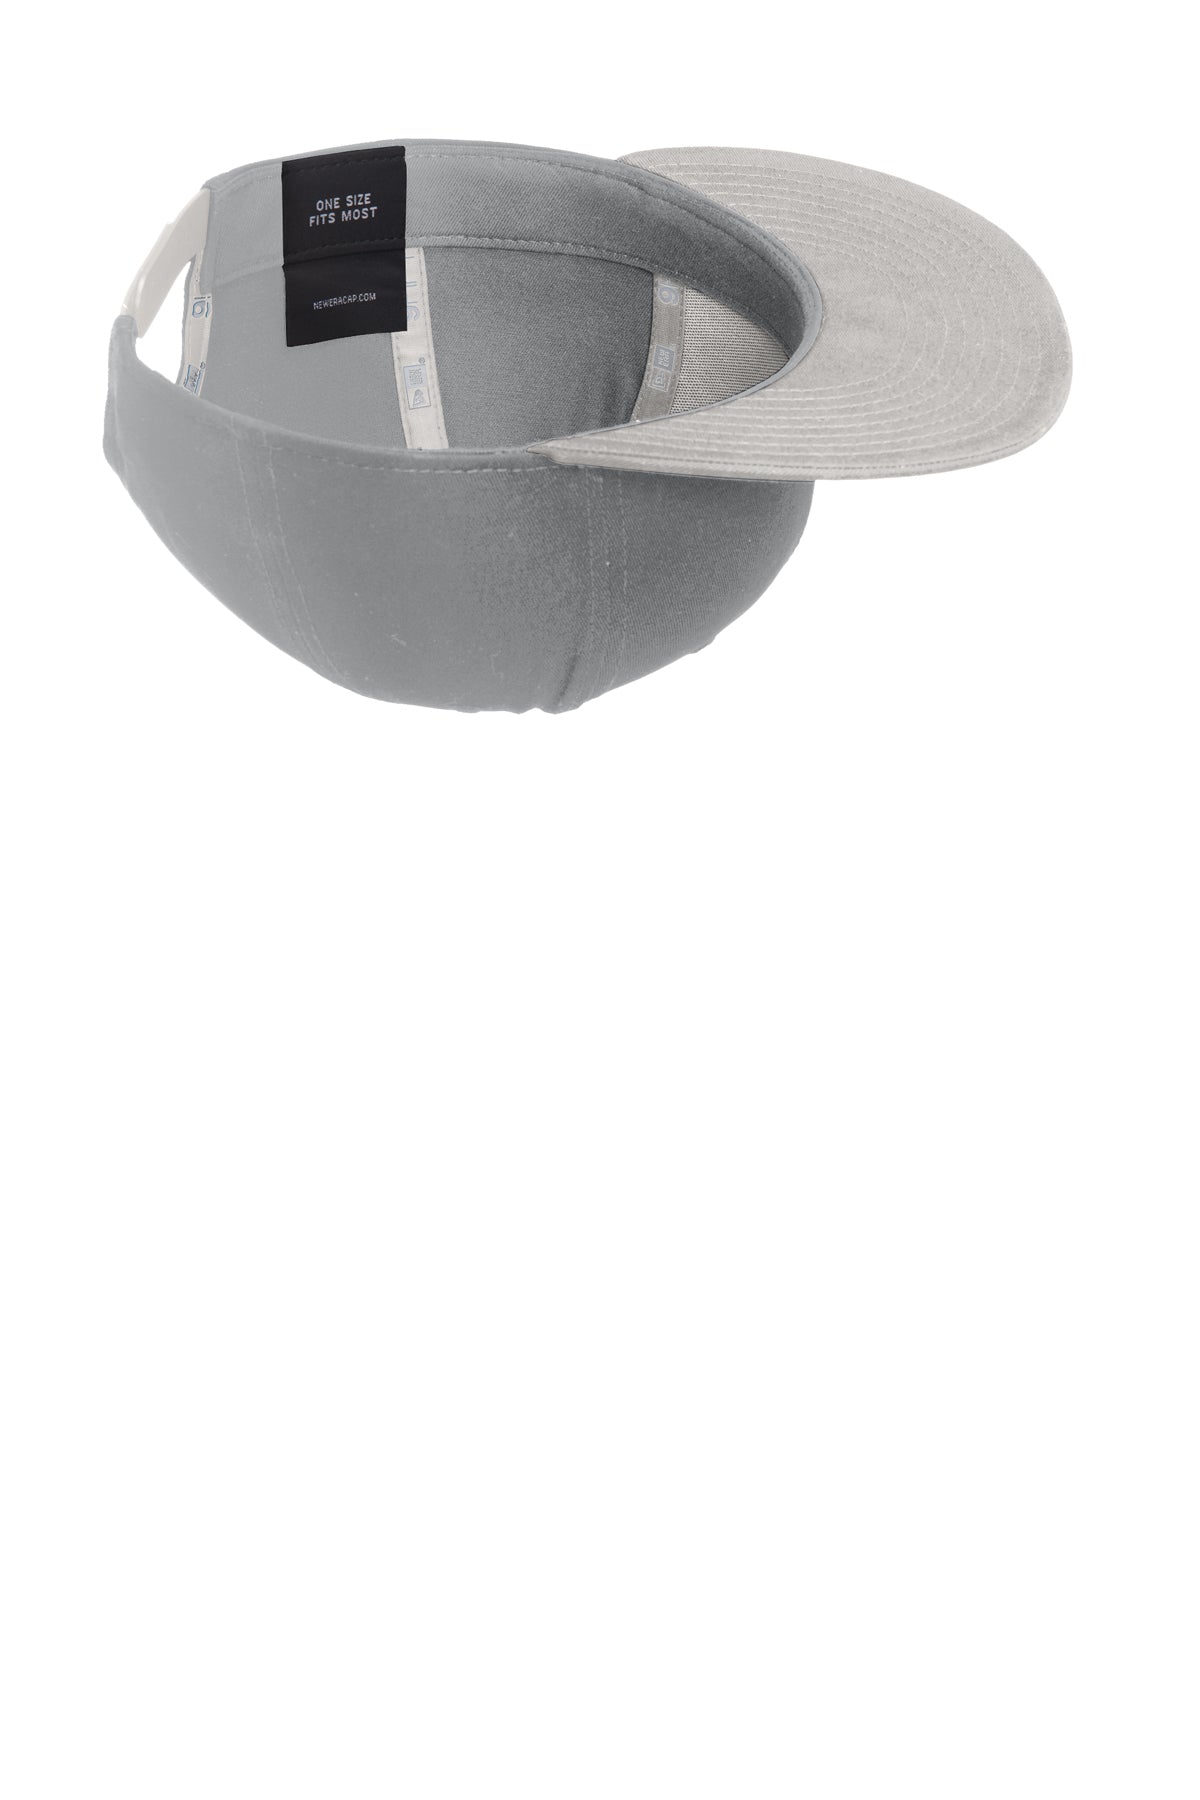 New Era Flat Bill Snapback Customized Caps, Grey